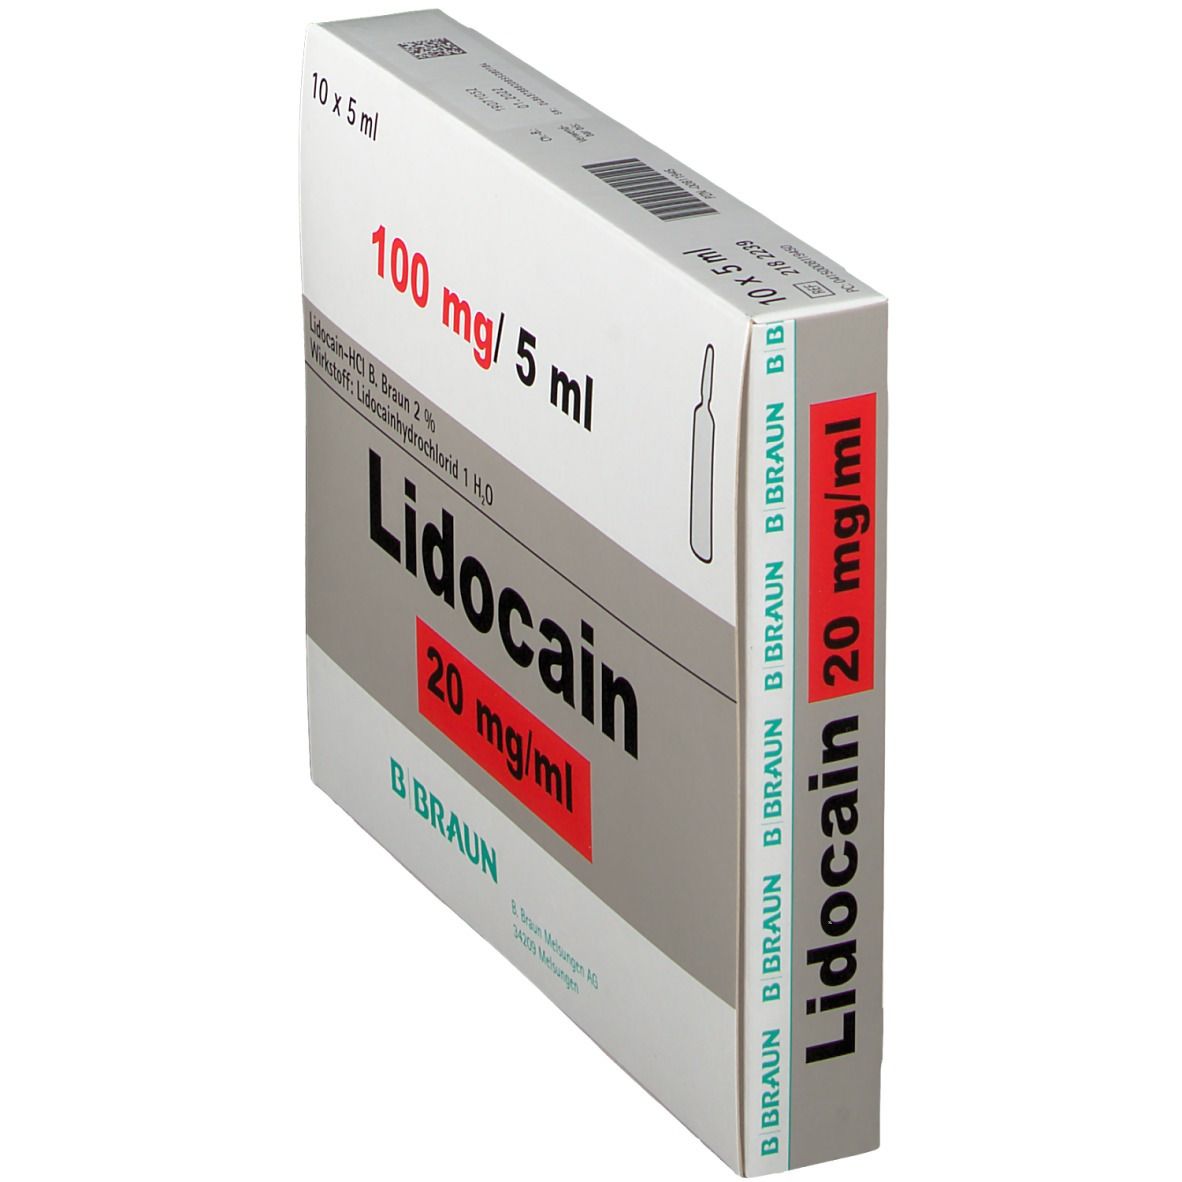 Lidocain-HCl B. Braun 2 %